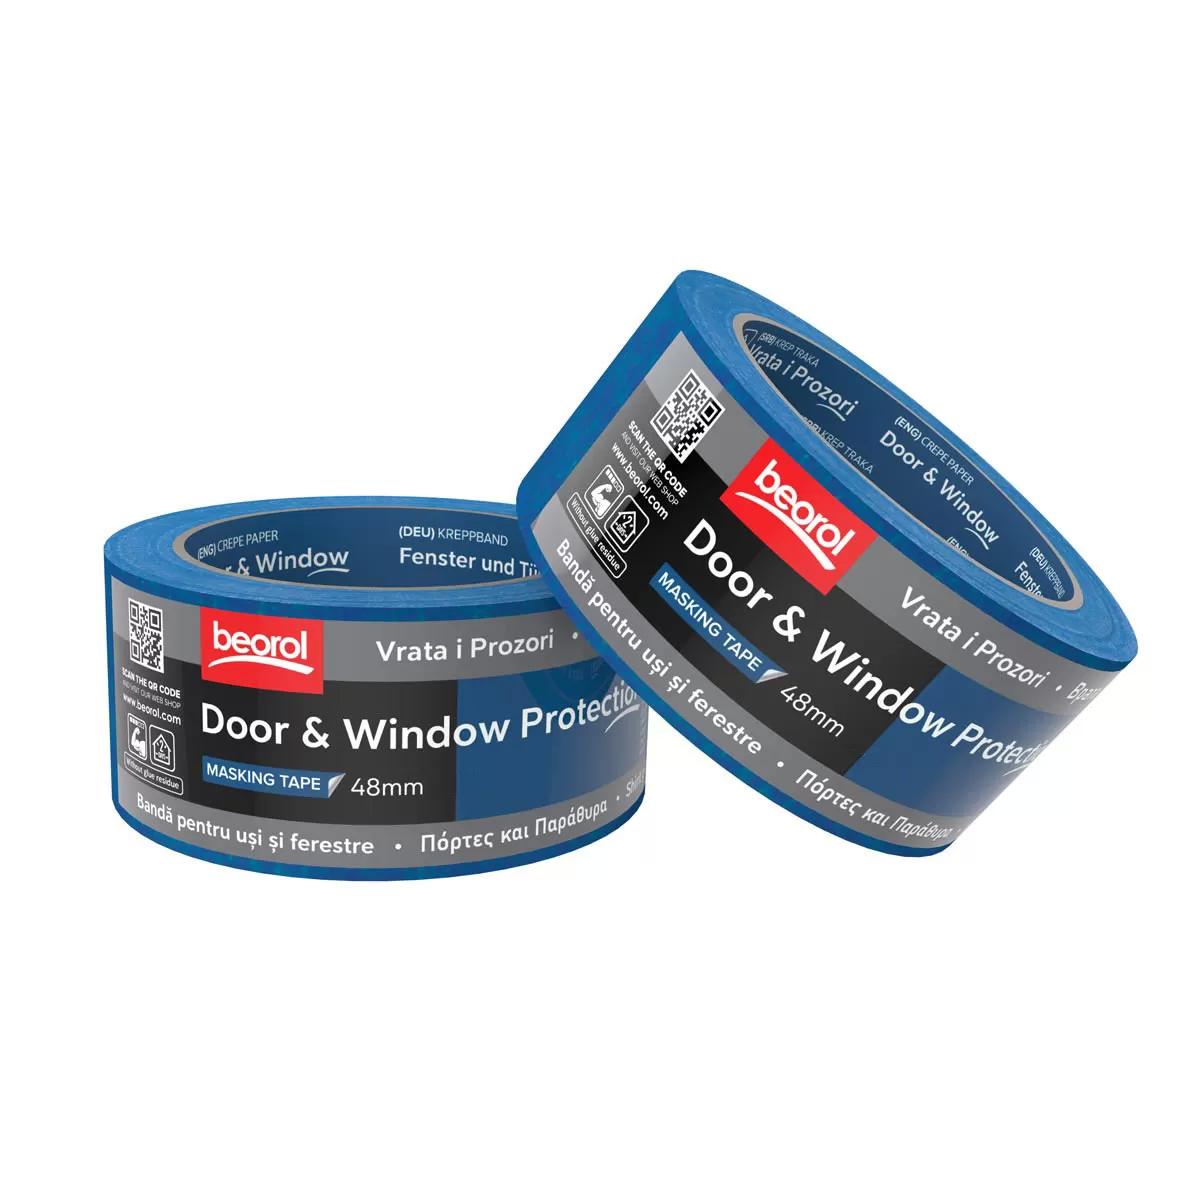 Masking tape Door & Window protection 48mm x 50m, 80ᵒC 